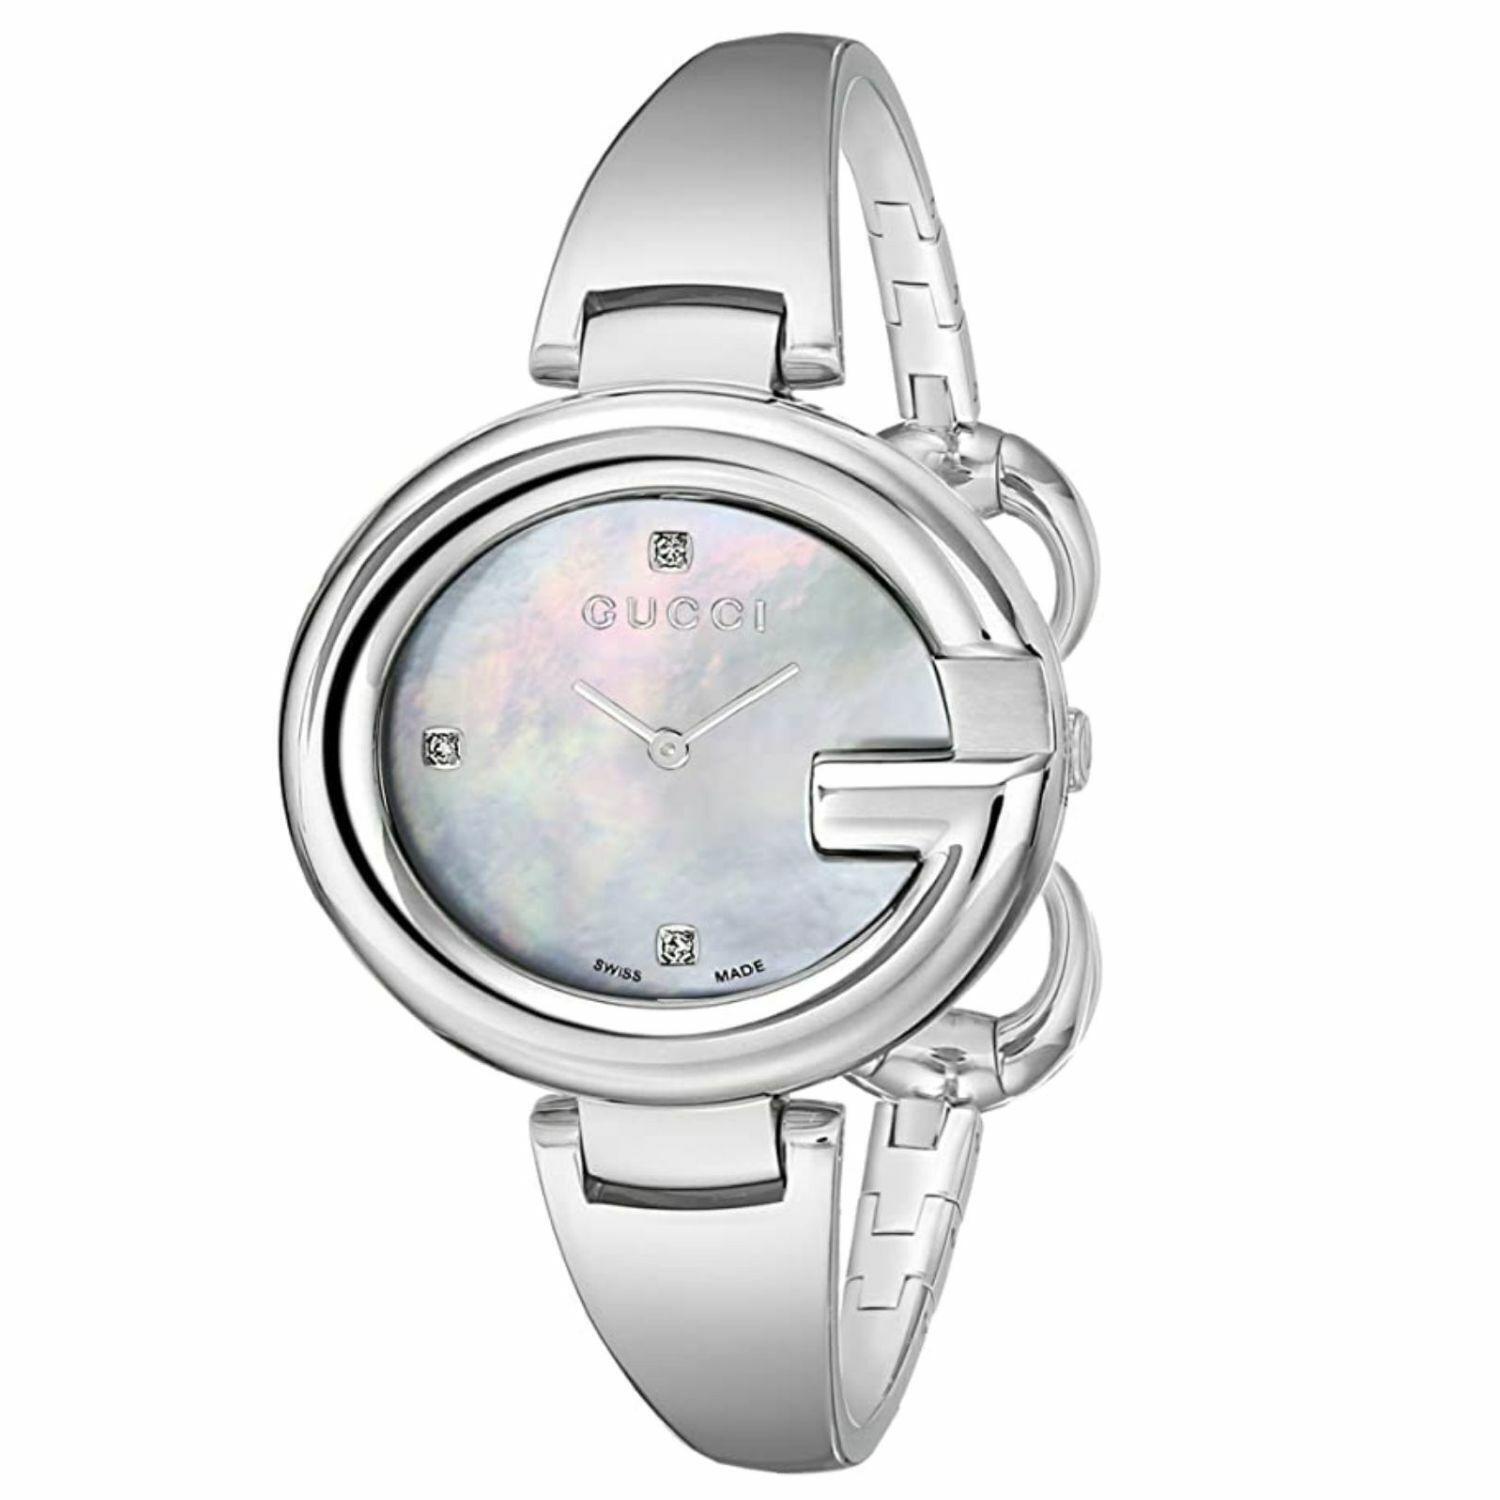 Gucci Women's Guccissima Diamond MOP Dial Quartz Watch - YA134303 ($795 MSRP)